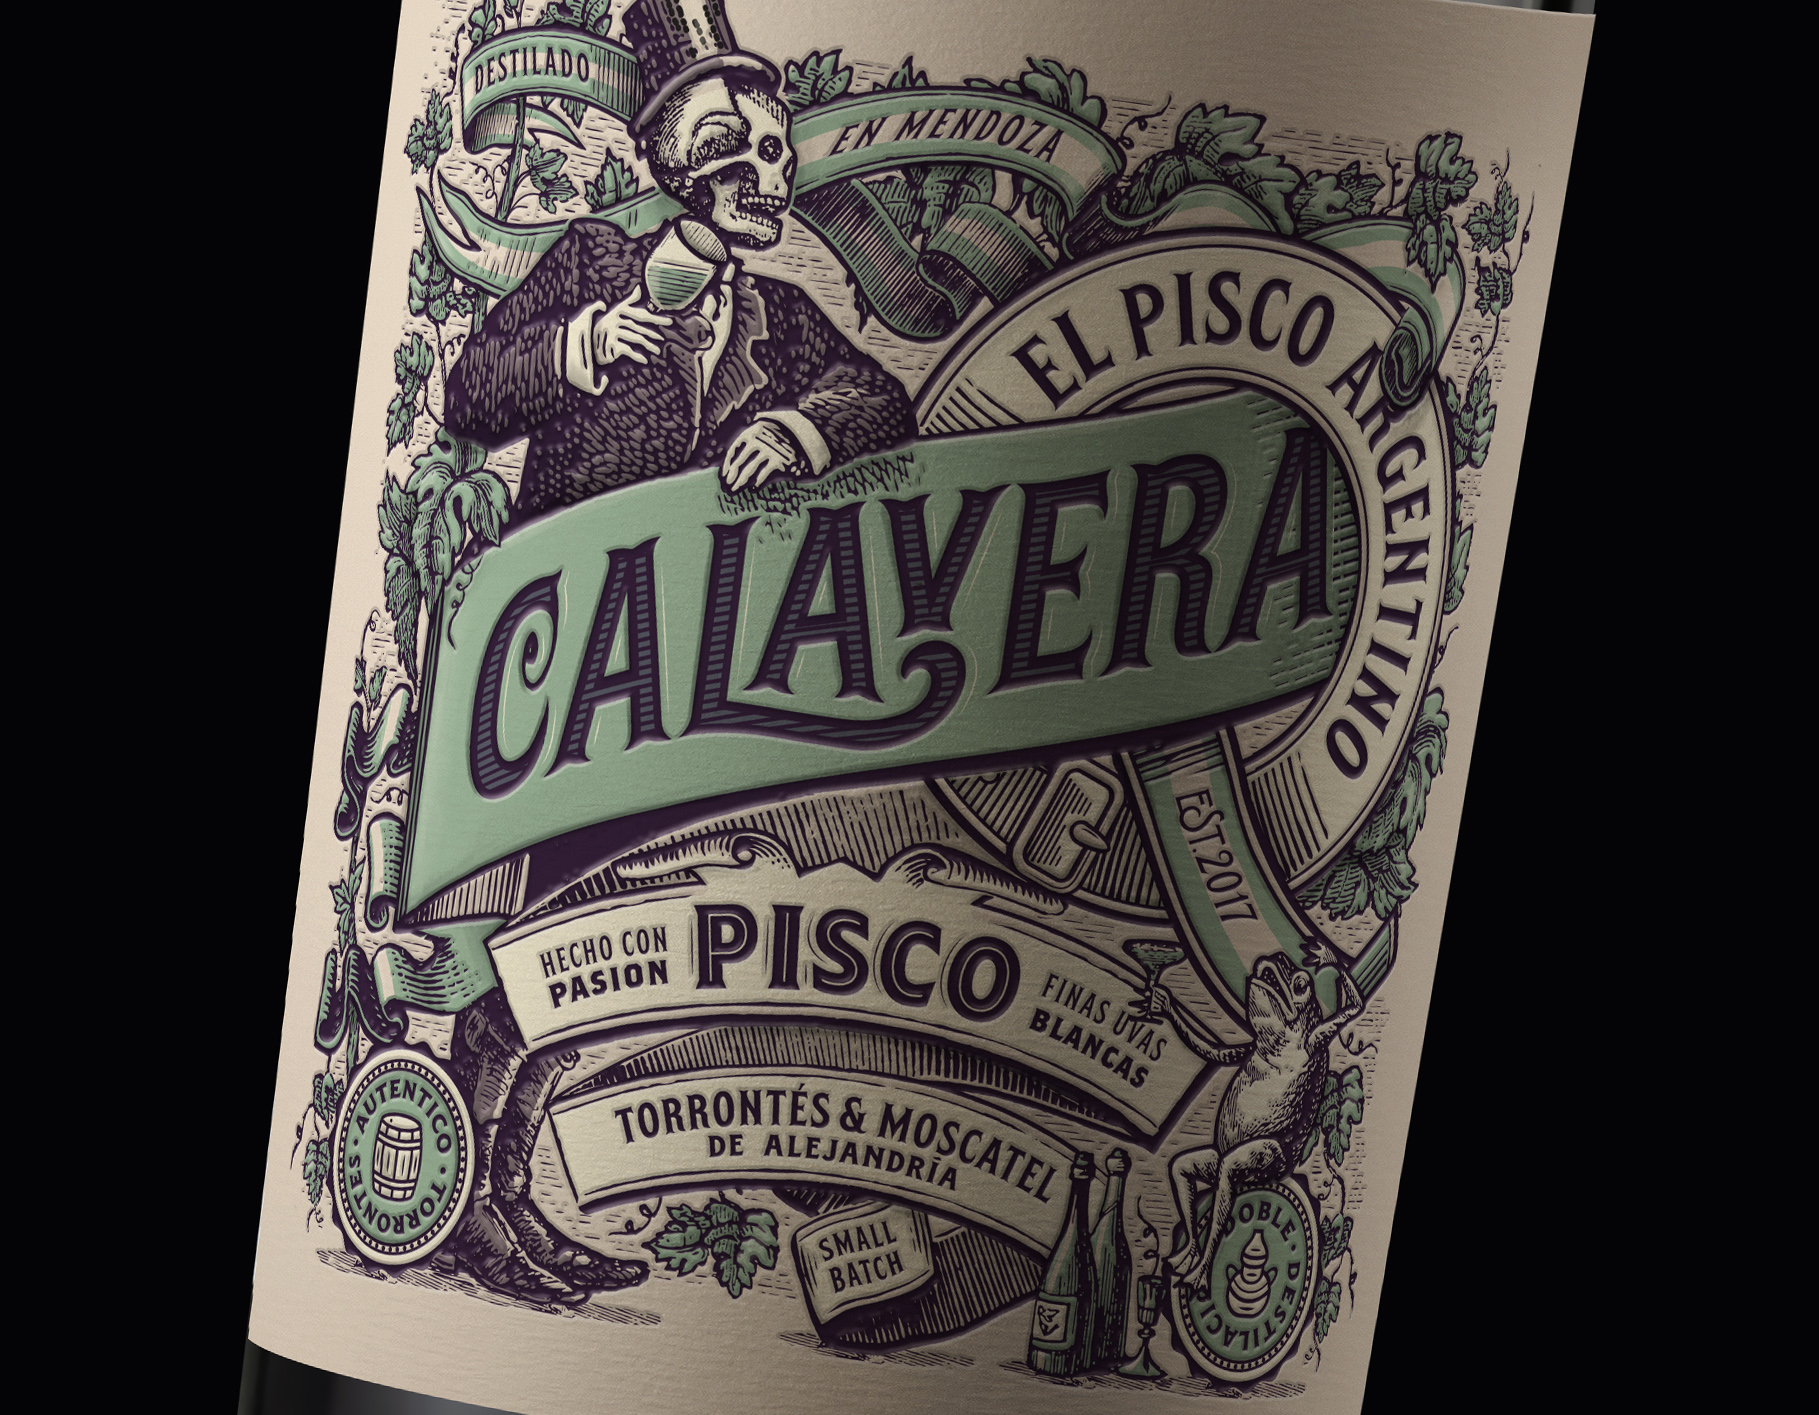 Calavera Pisco Packaging Design from Argentina